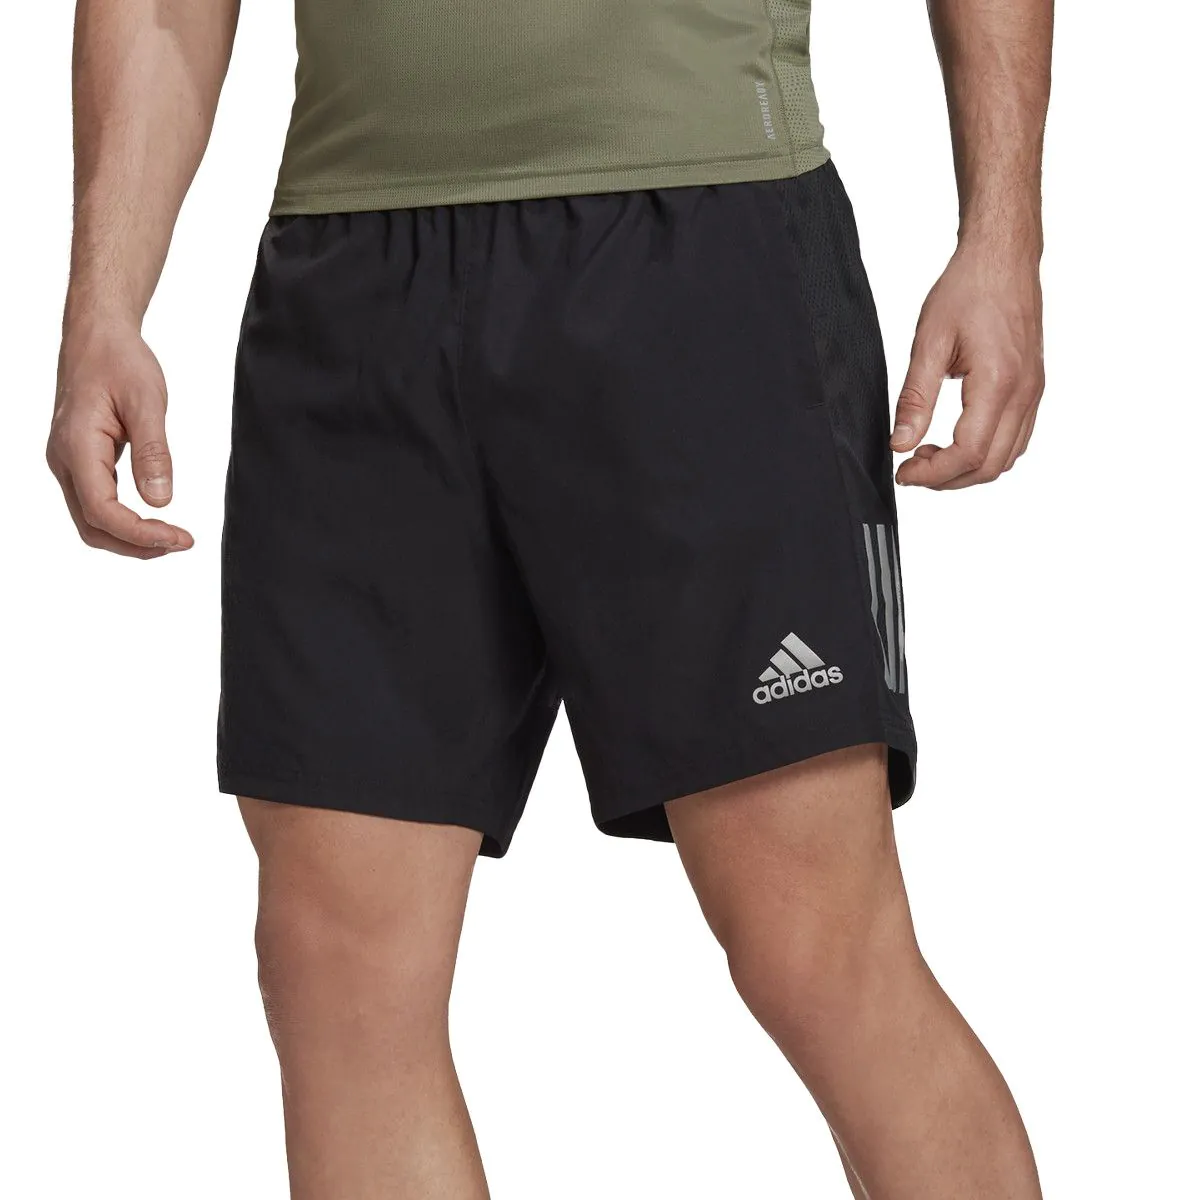 adidas Own The Run Men's Shorts FS9807